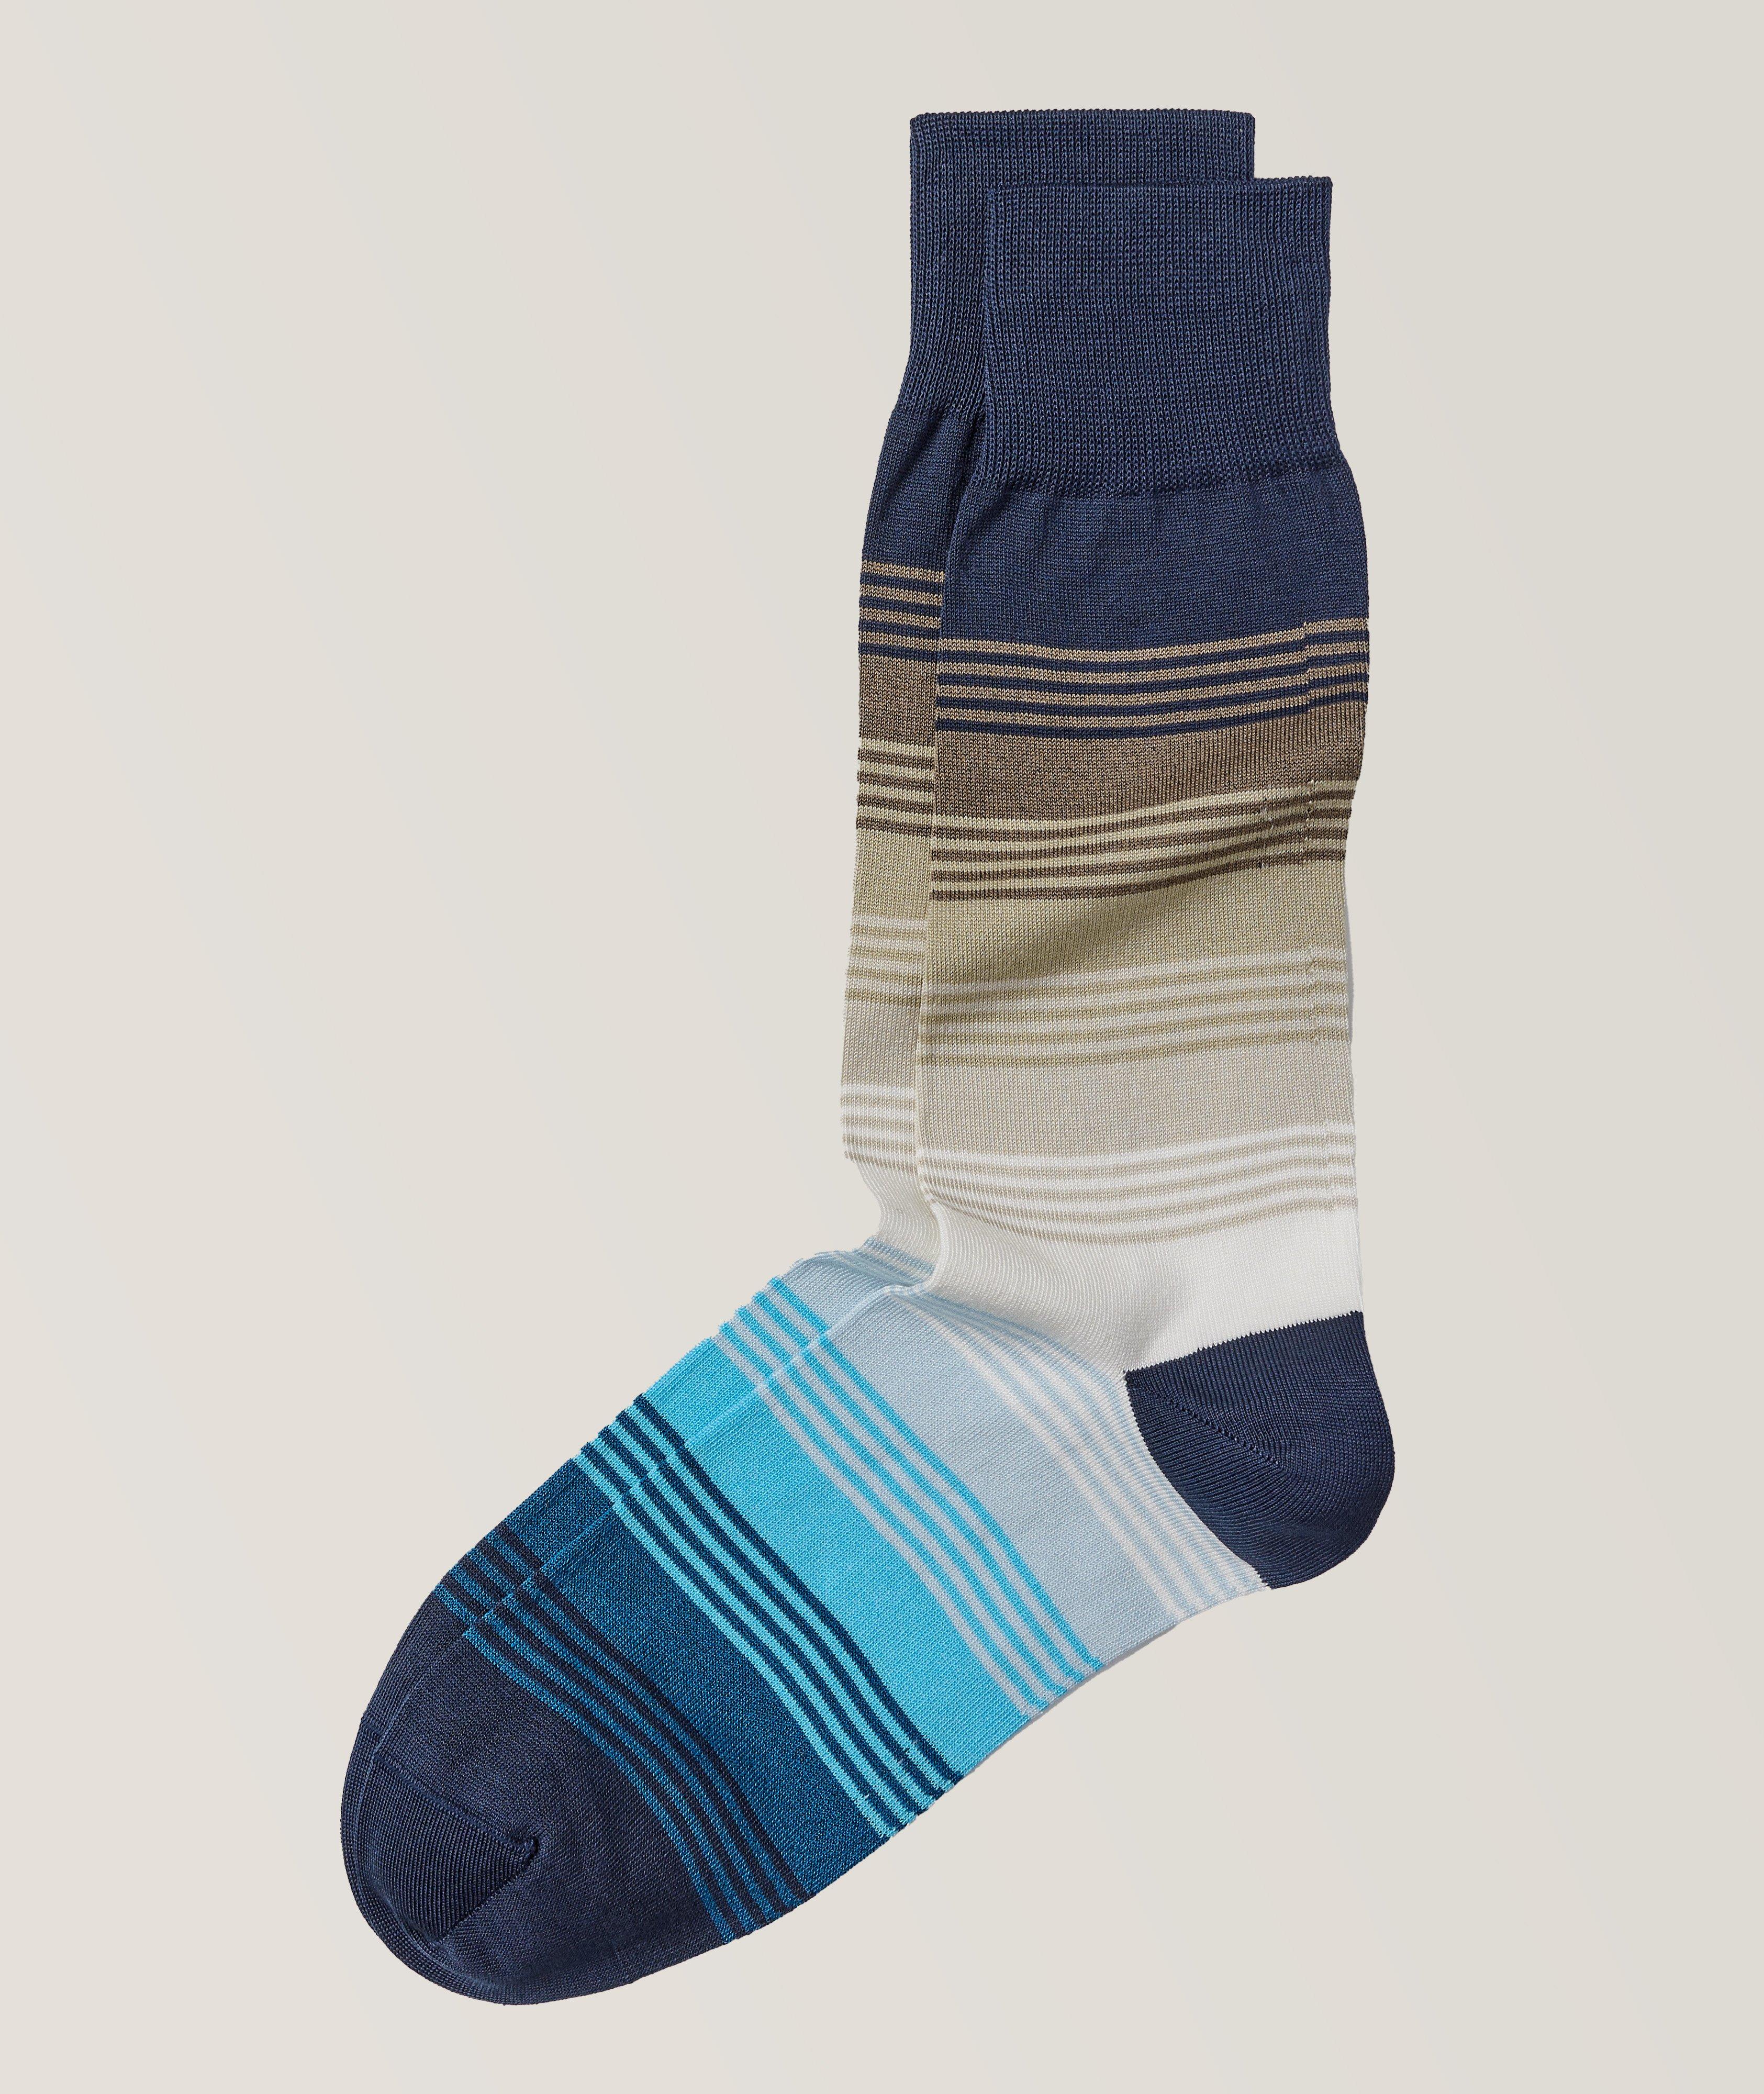 Gradient Stripe Stretch-Mercerized Cotton Blend Socks image 0